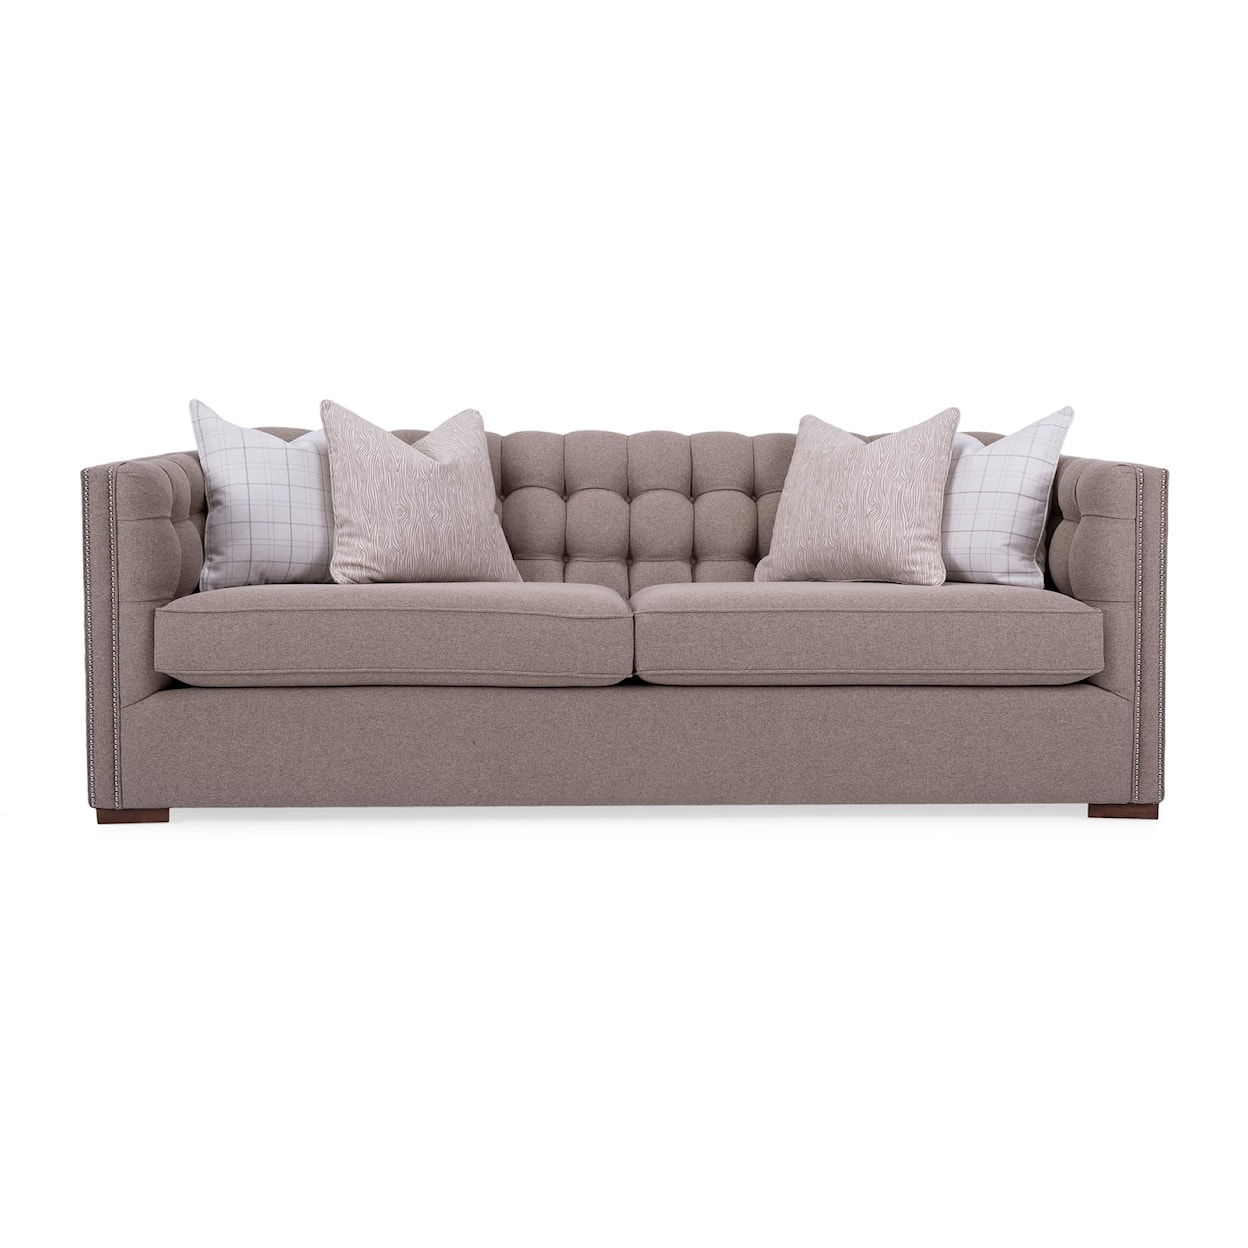 Decor-Rest 7793 Series Sofa